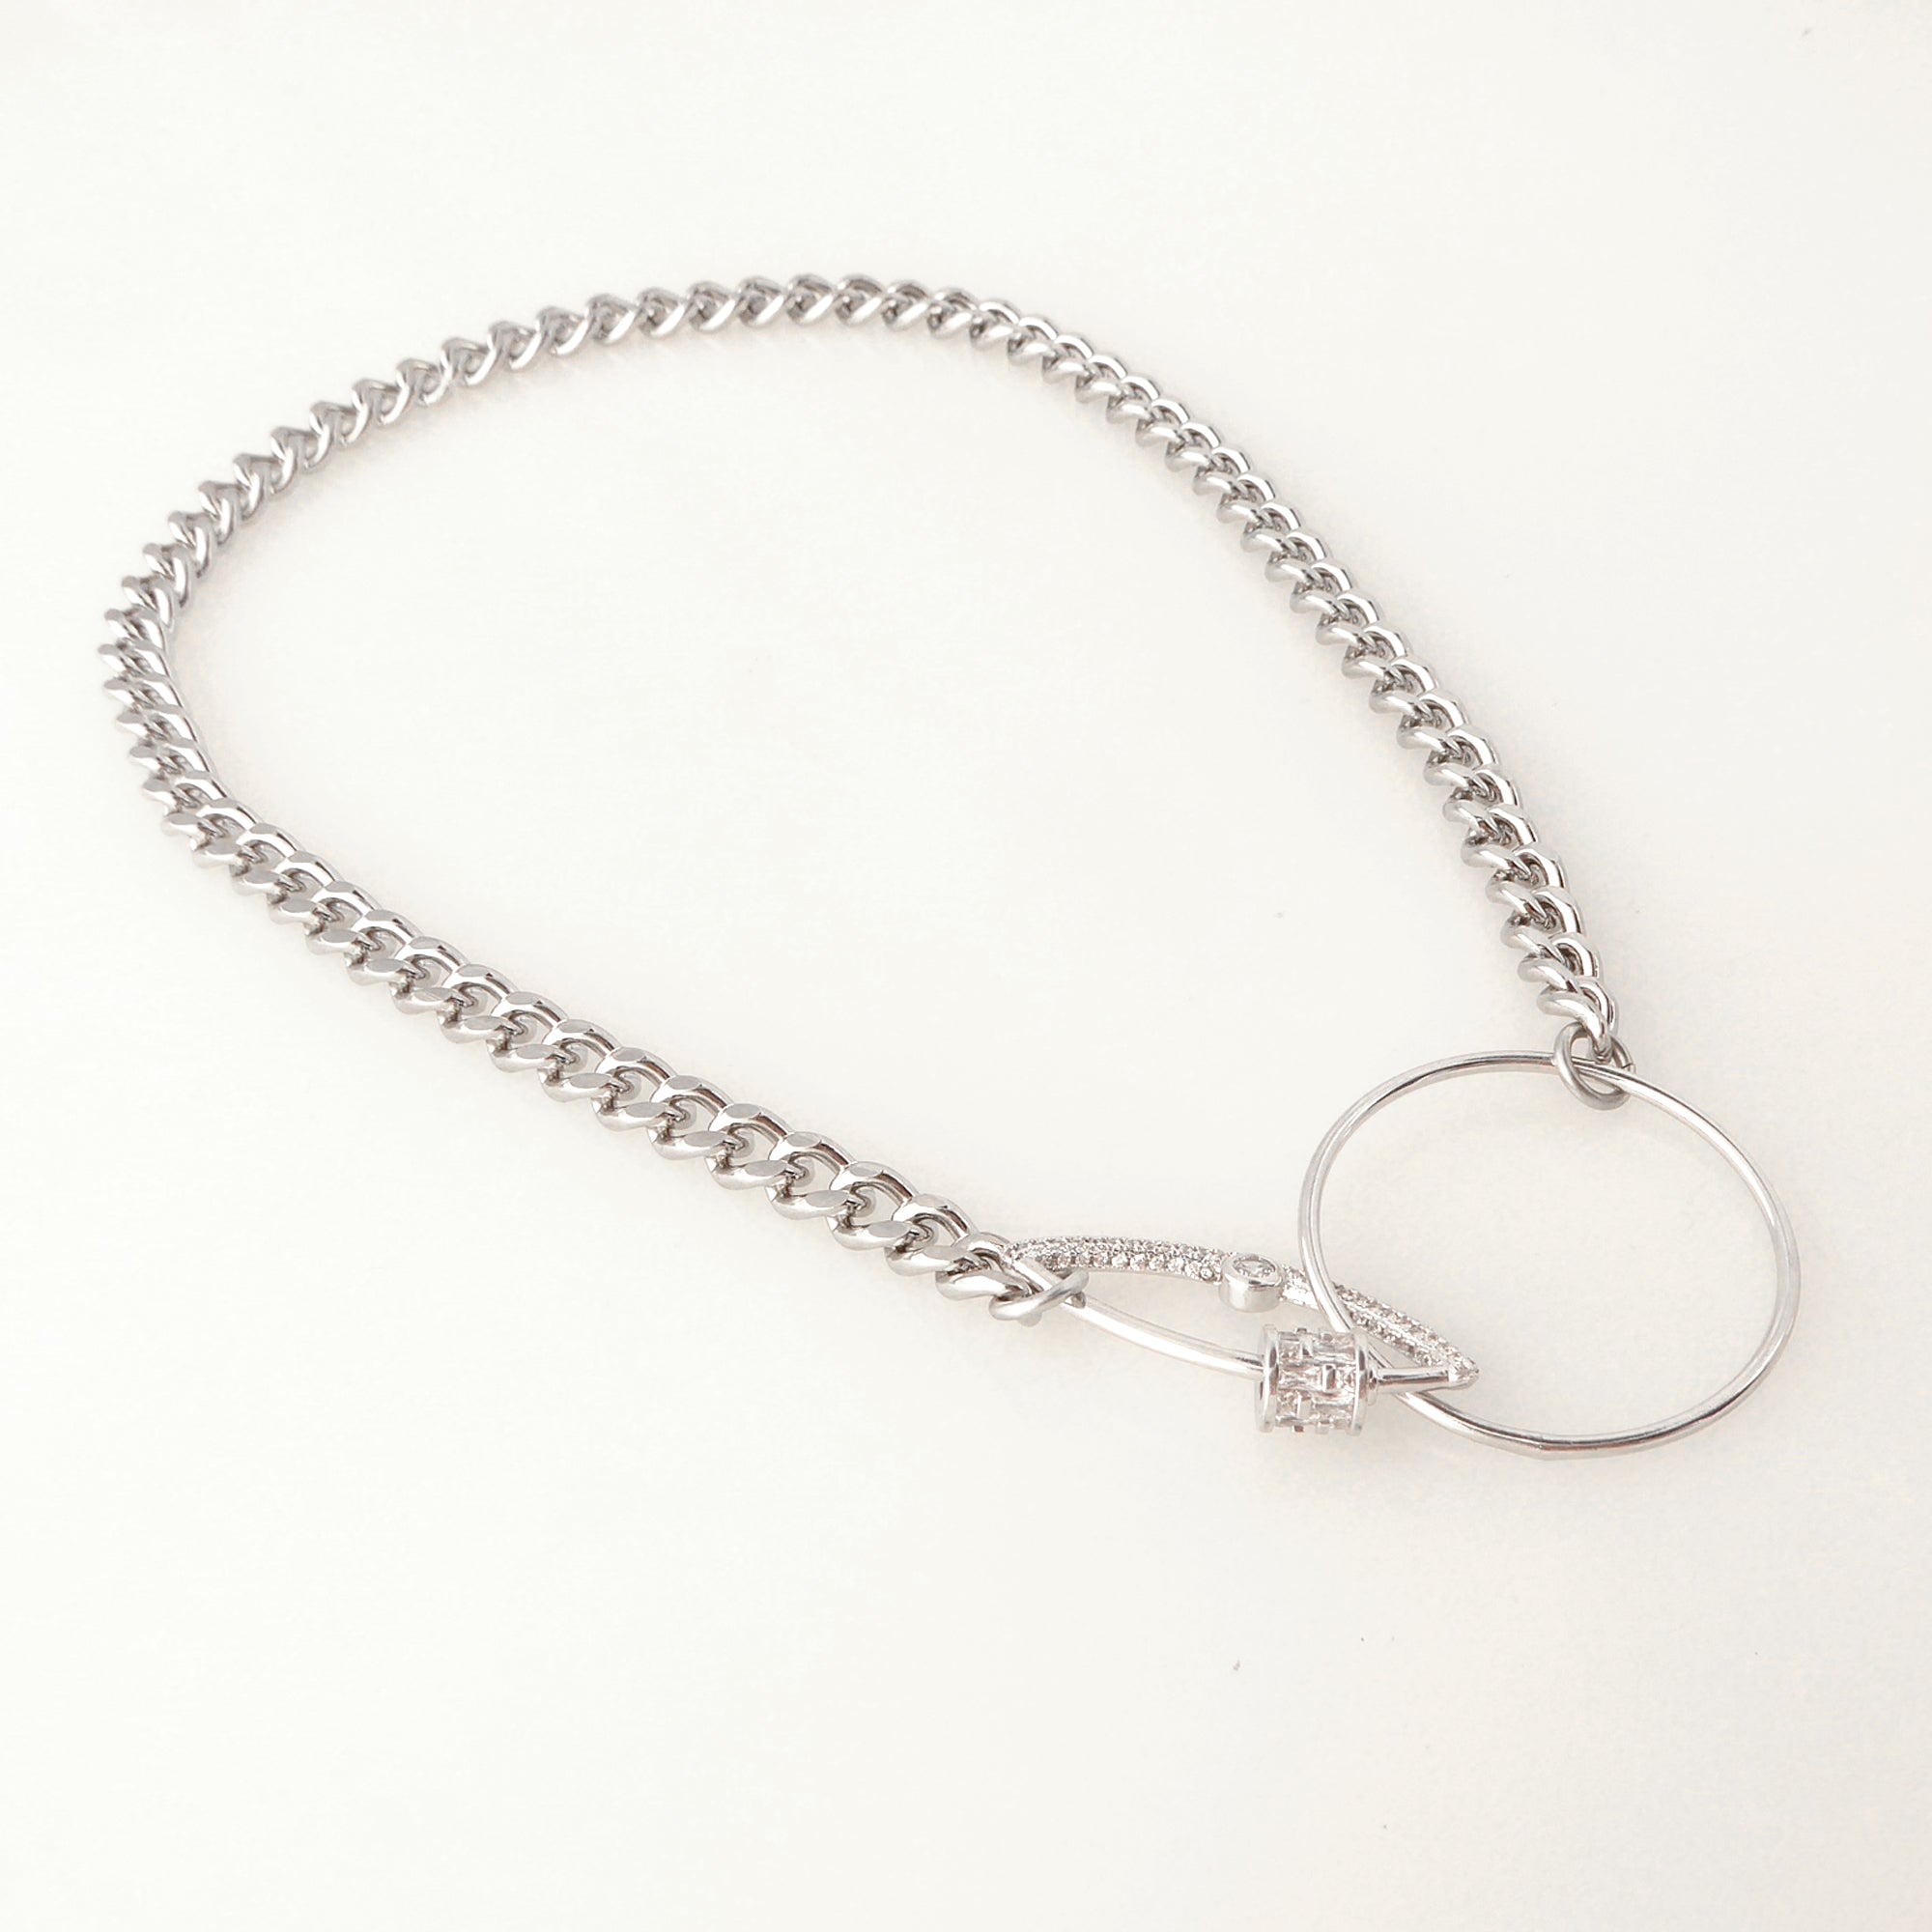 Silver rhinestone eye carabiner necklace by Jenny Dayco 2